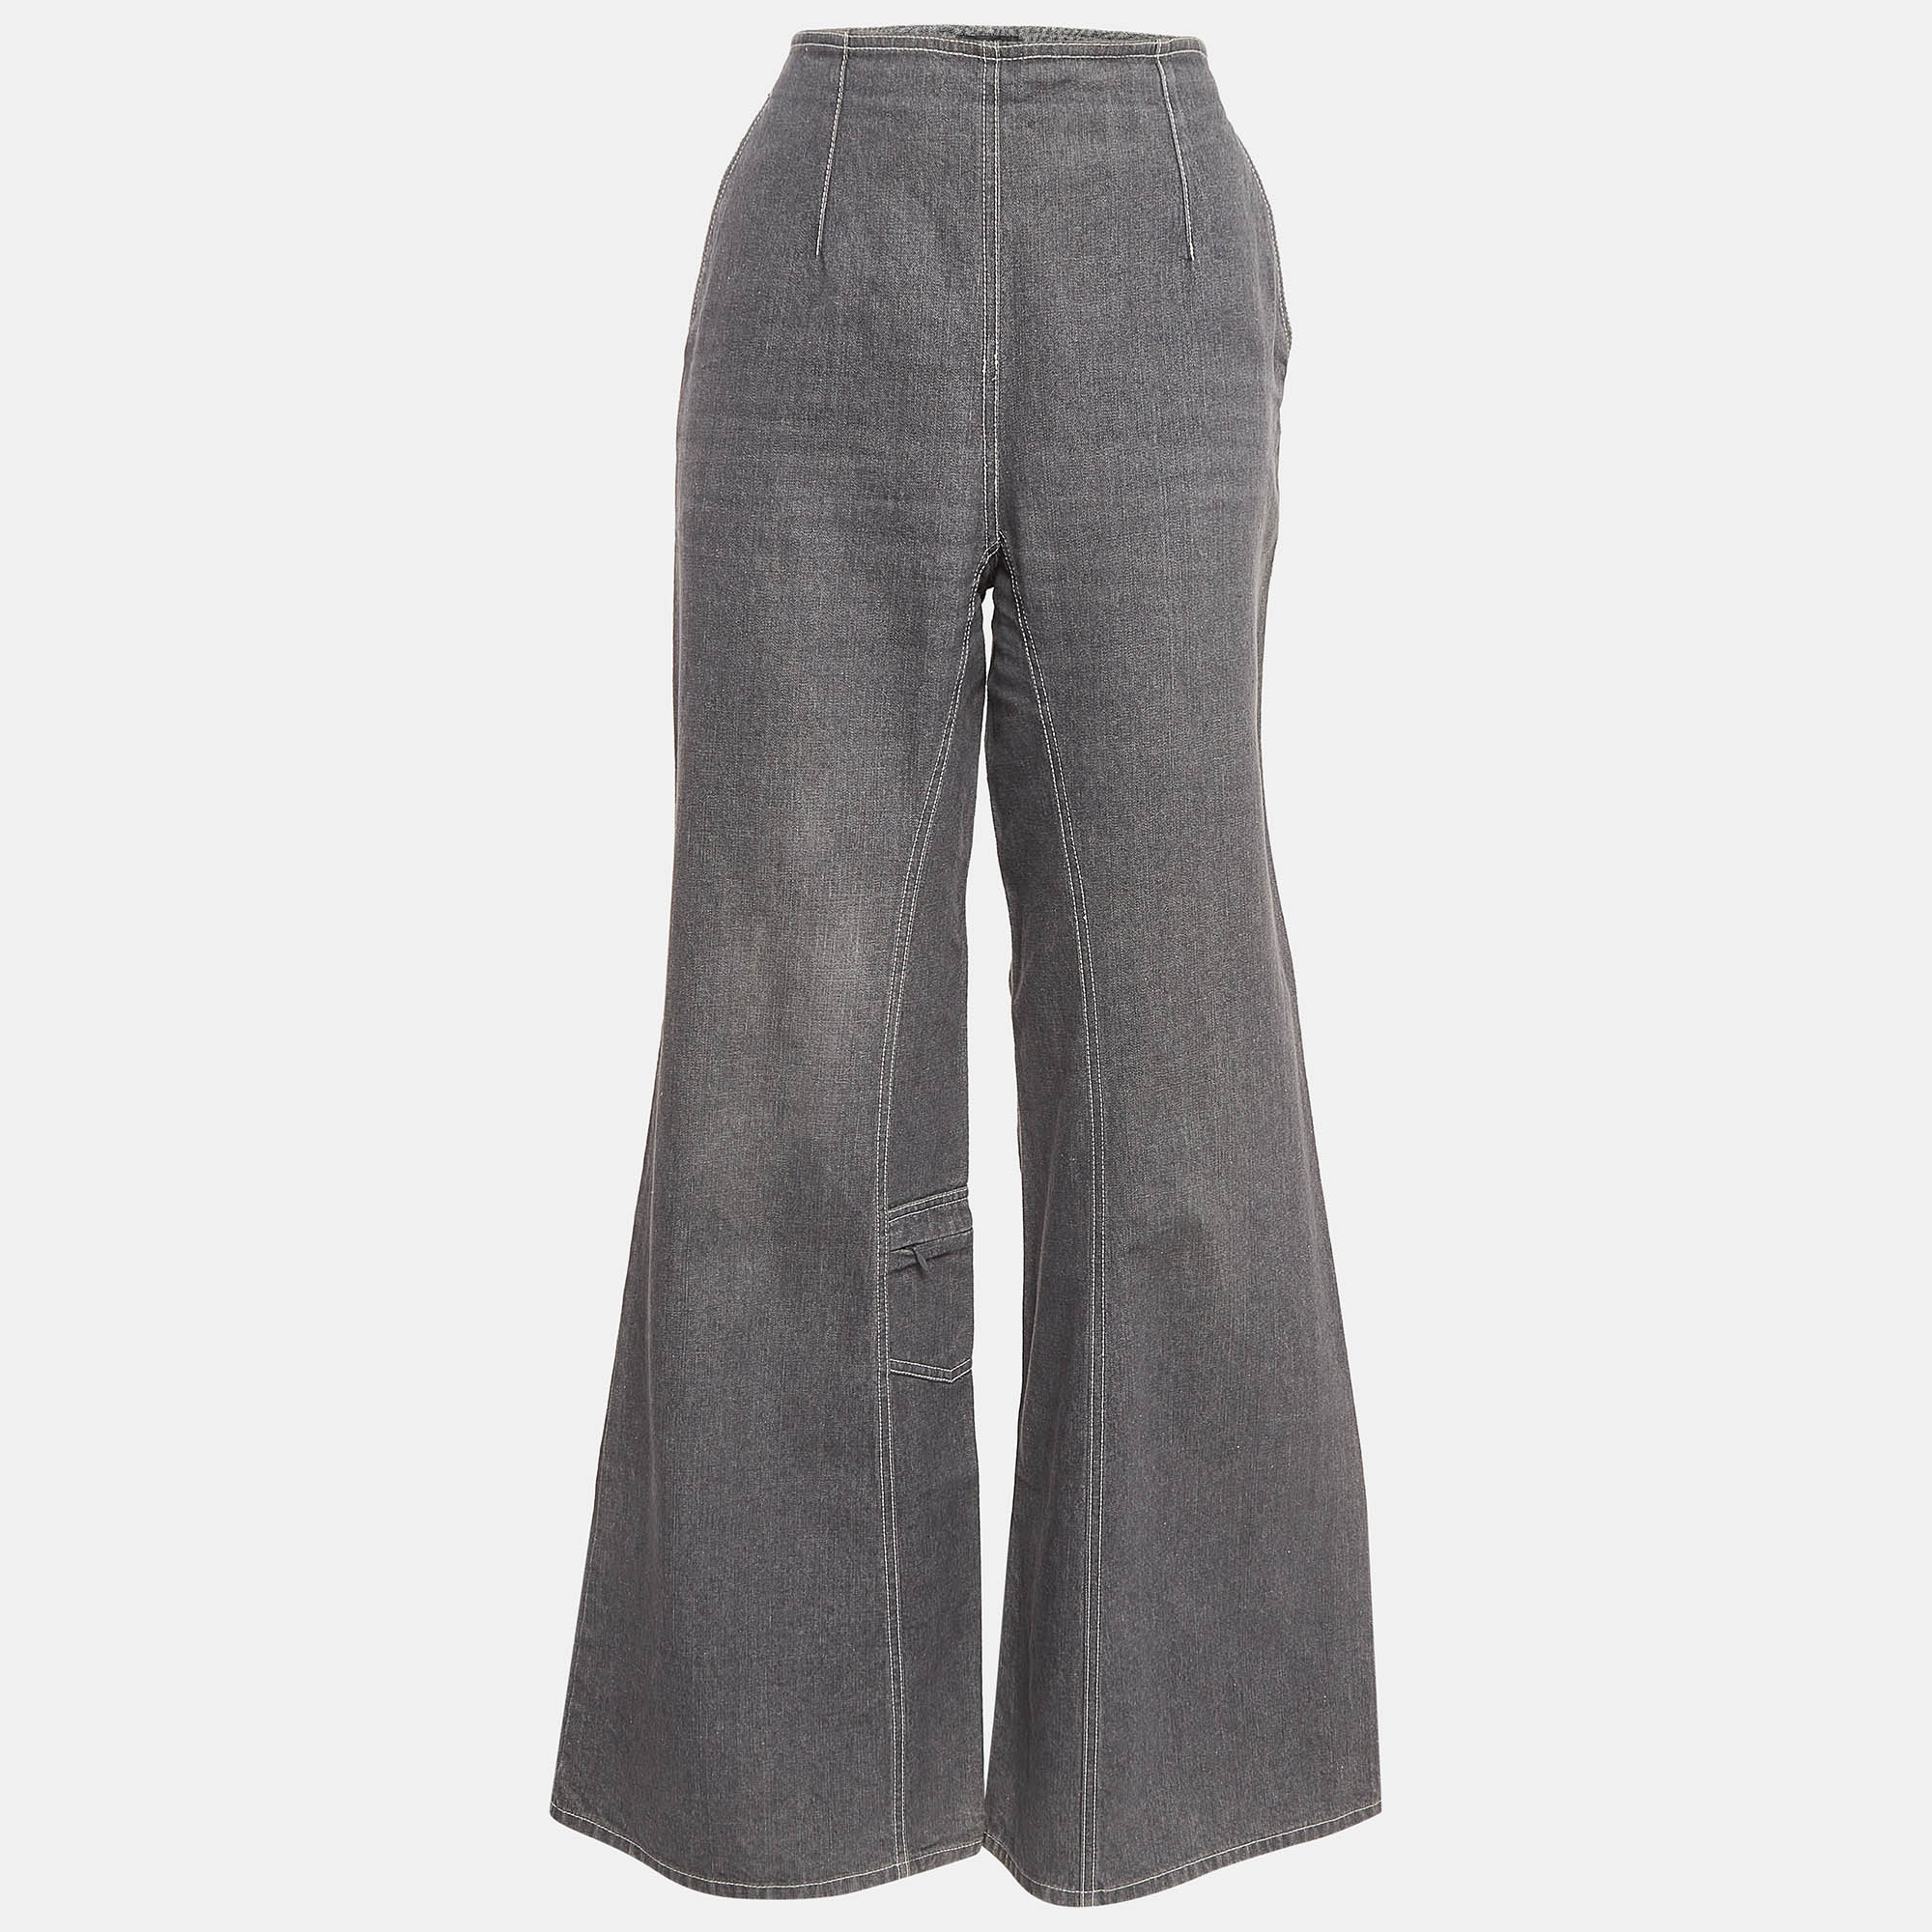 Chanel grey cc embellished denim flared jeans l waist 32"